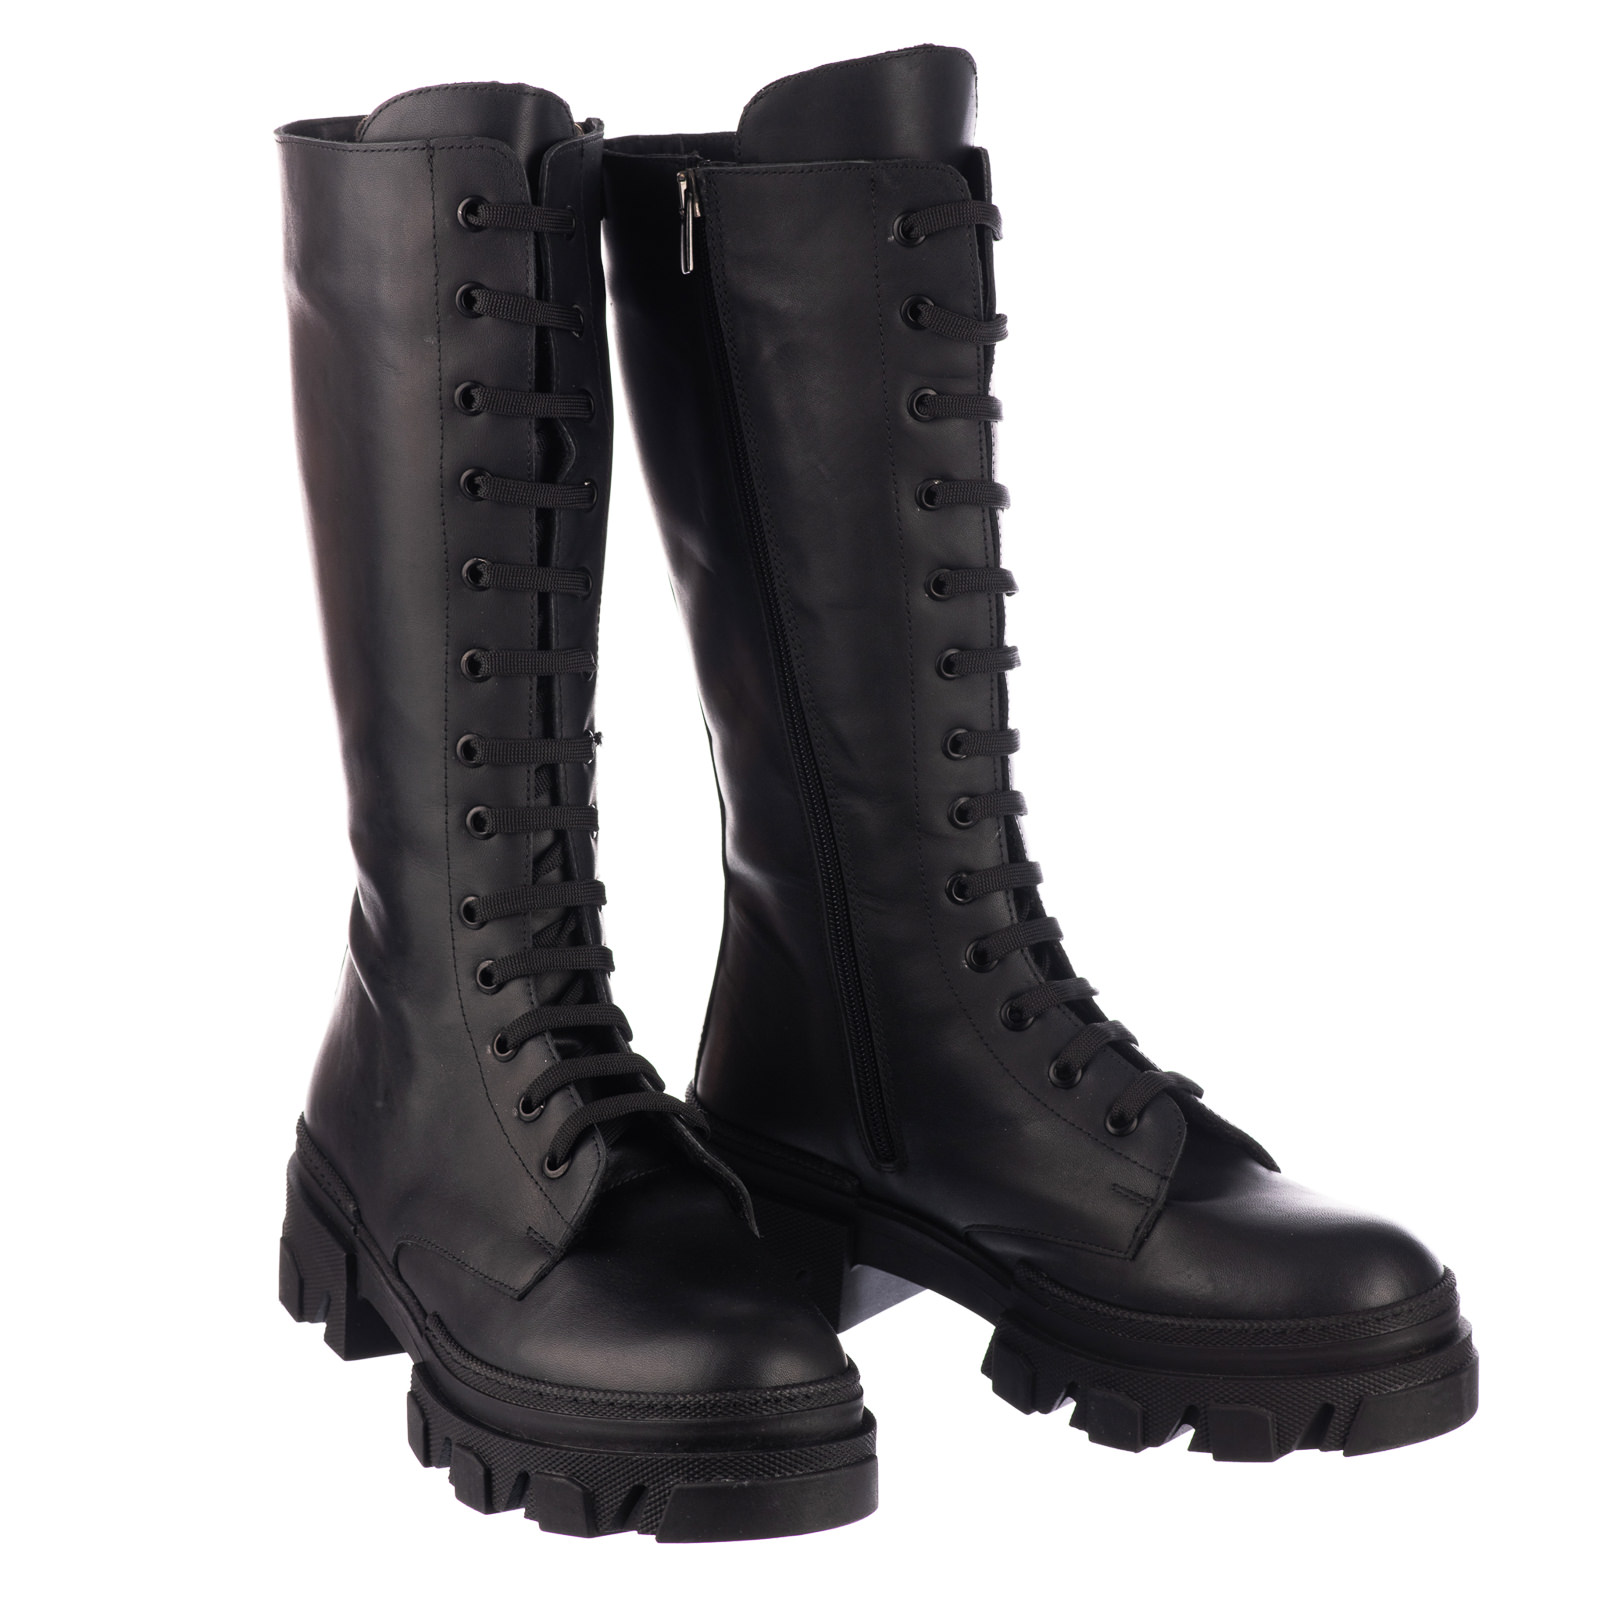 Leather WATERPROOF boots B701 - BLACK